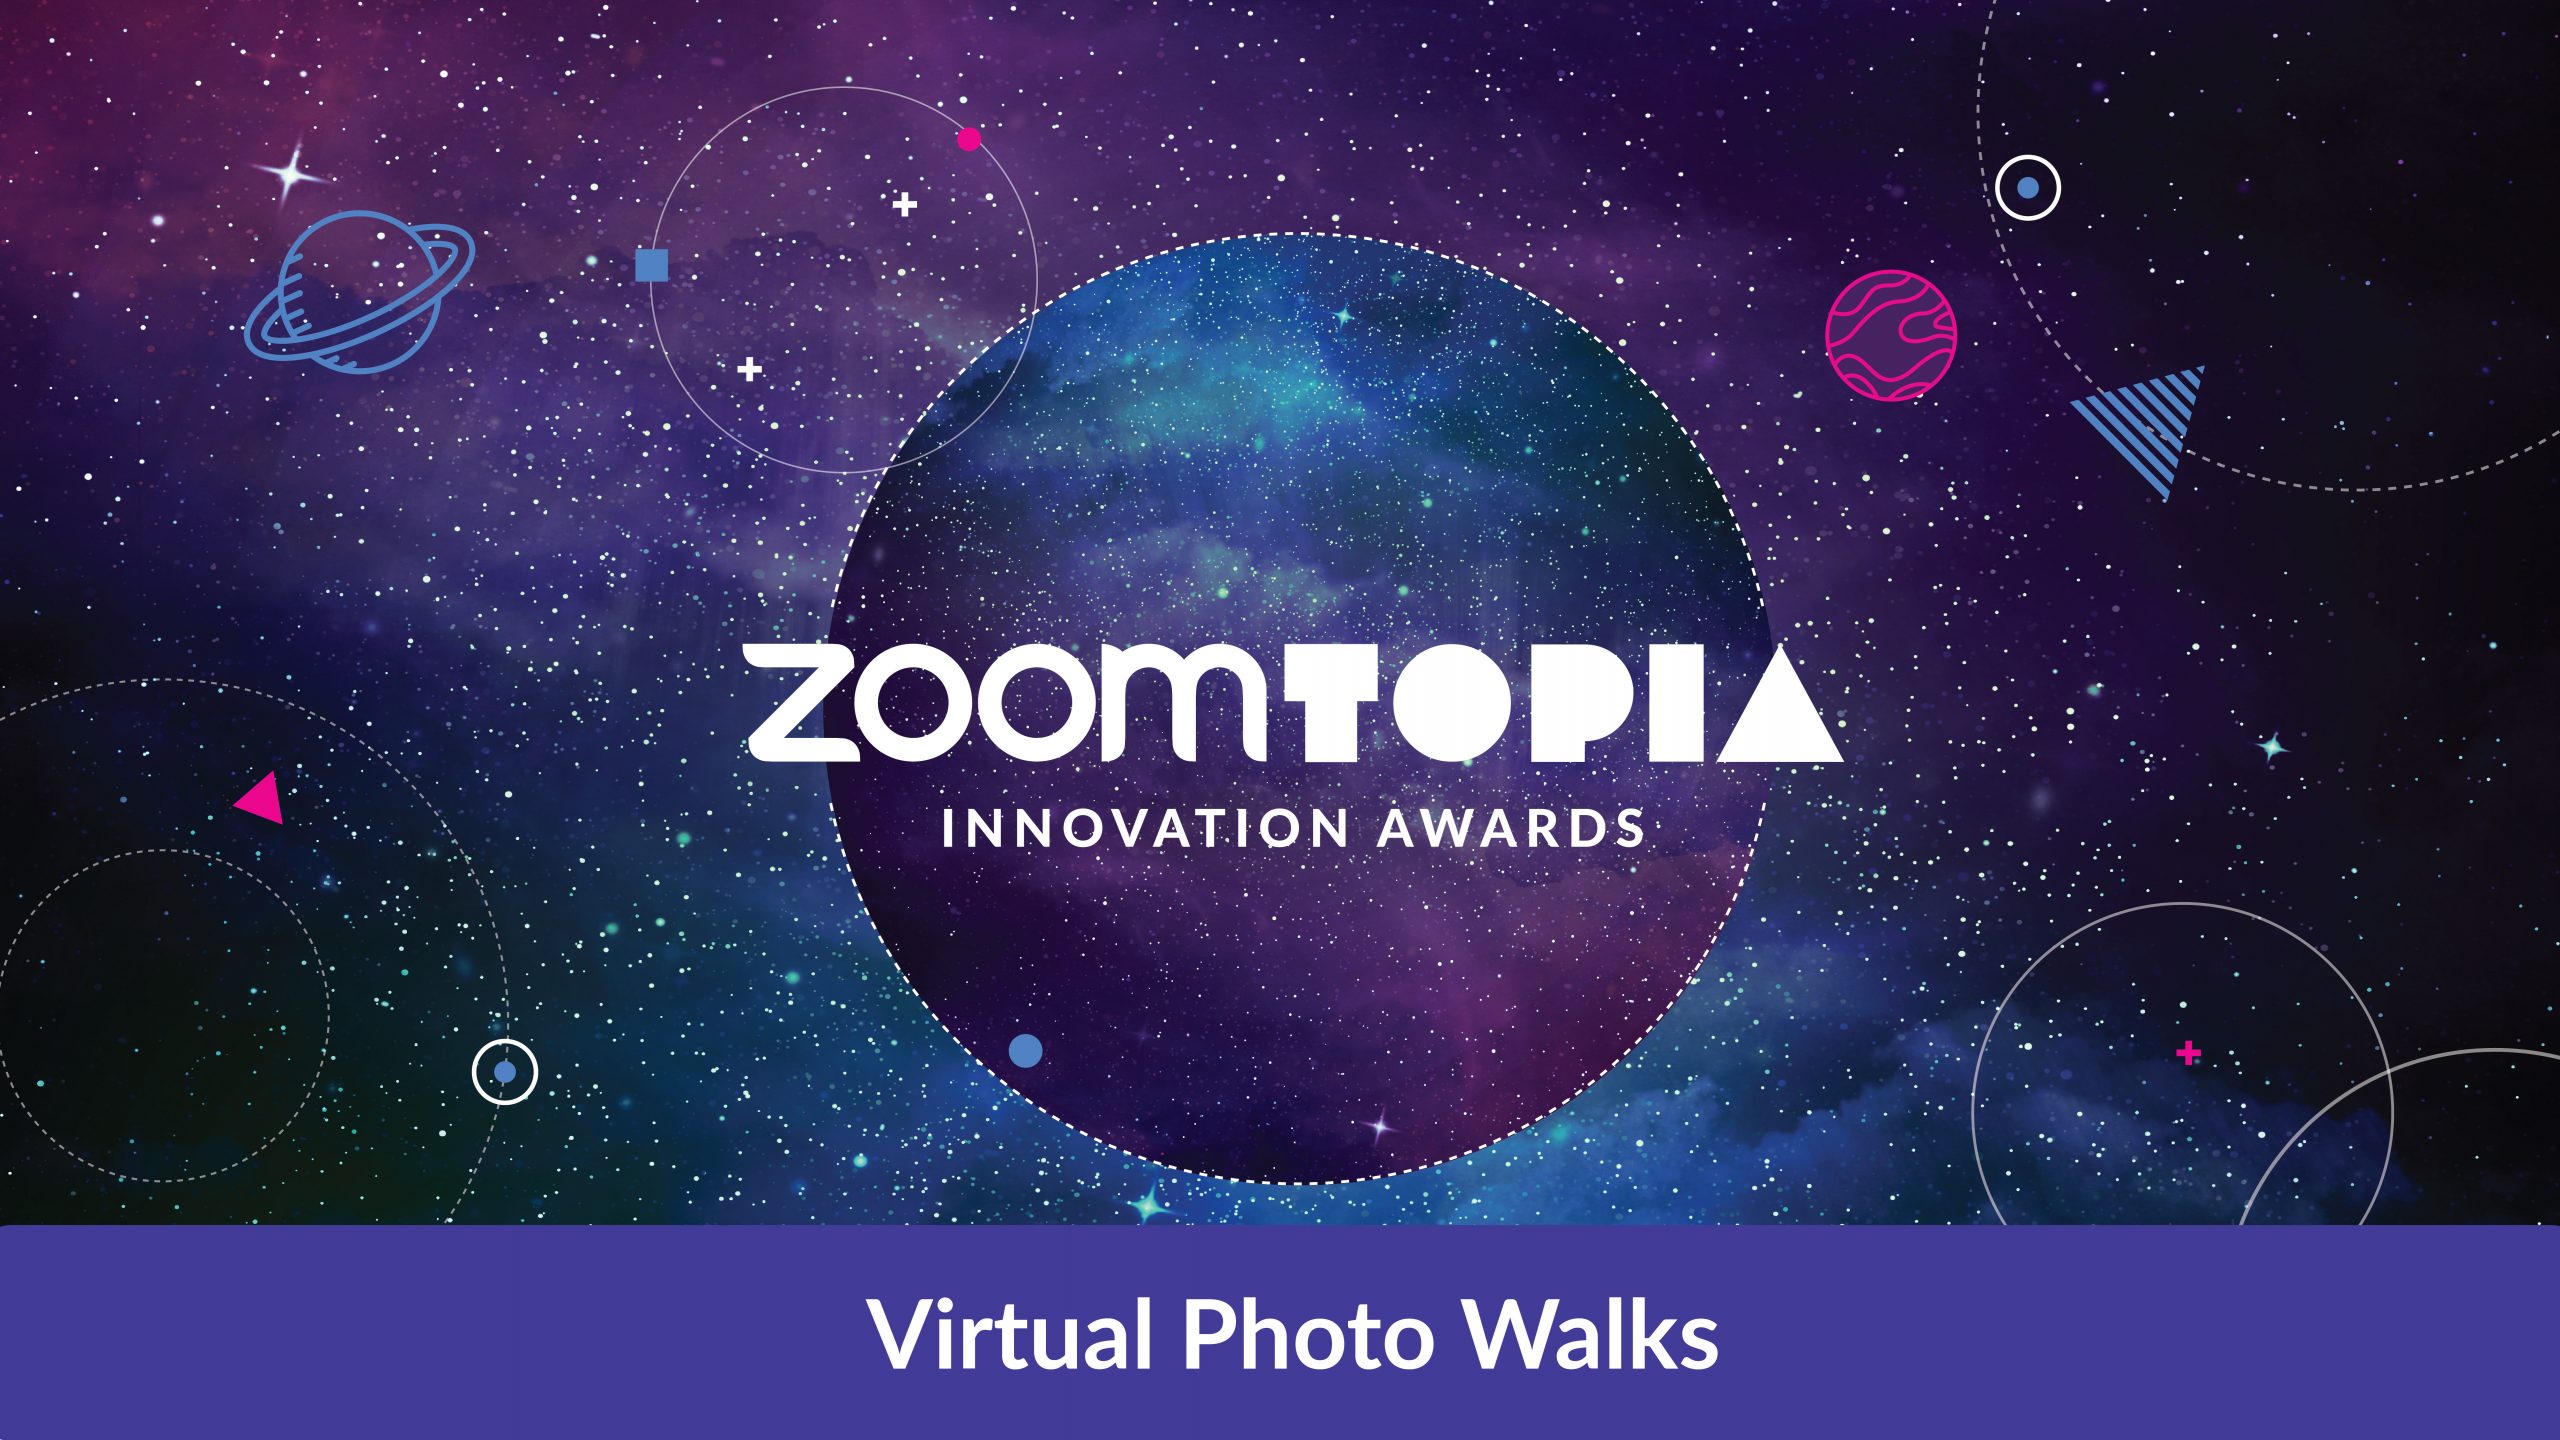 Zoomtopia Innovation Awards: Virtual Photo Walks